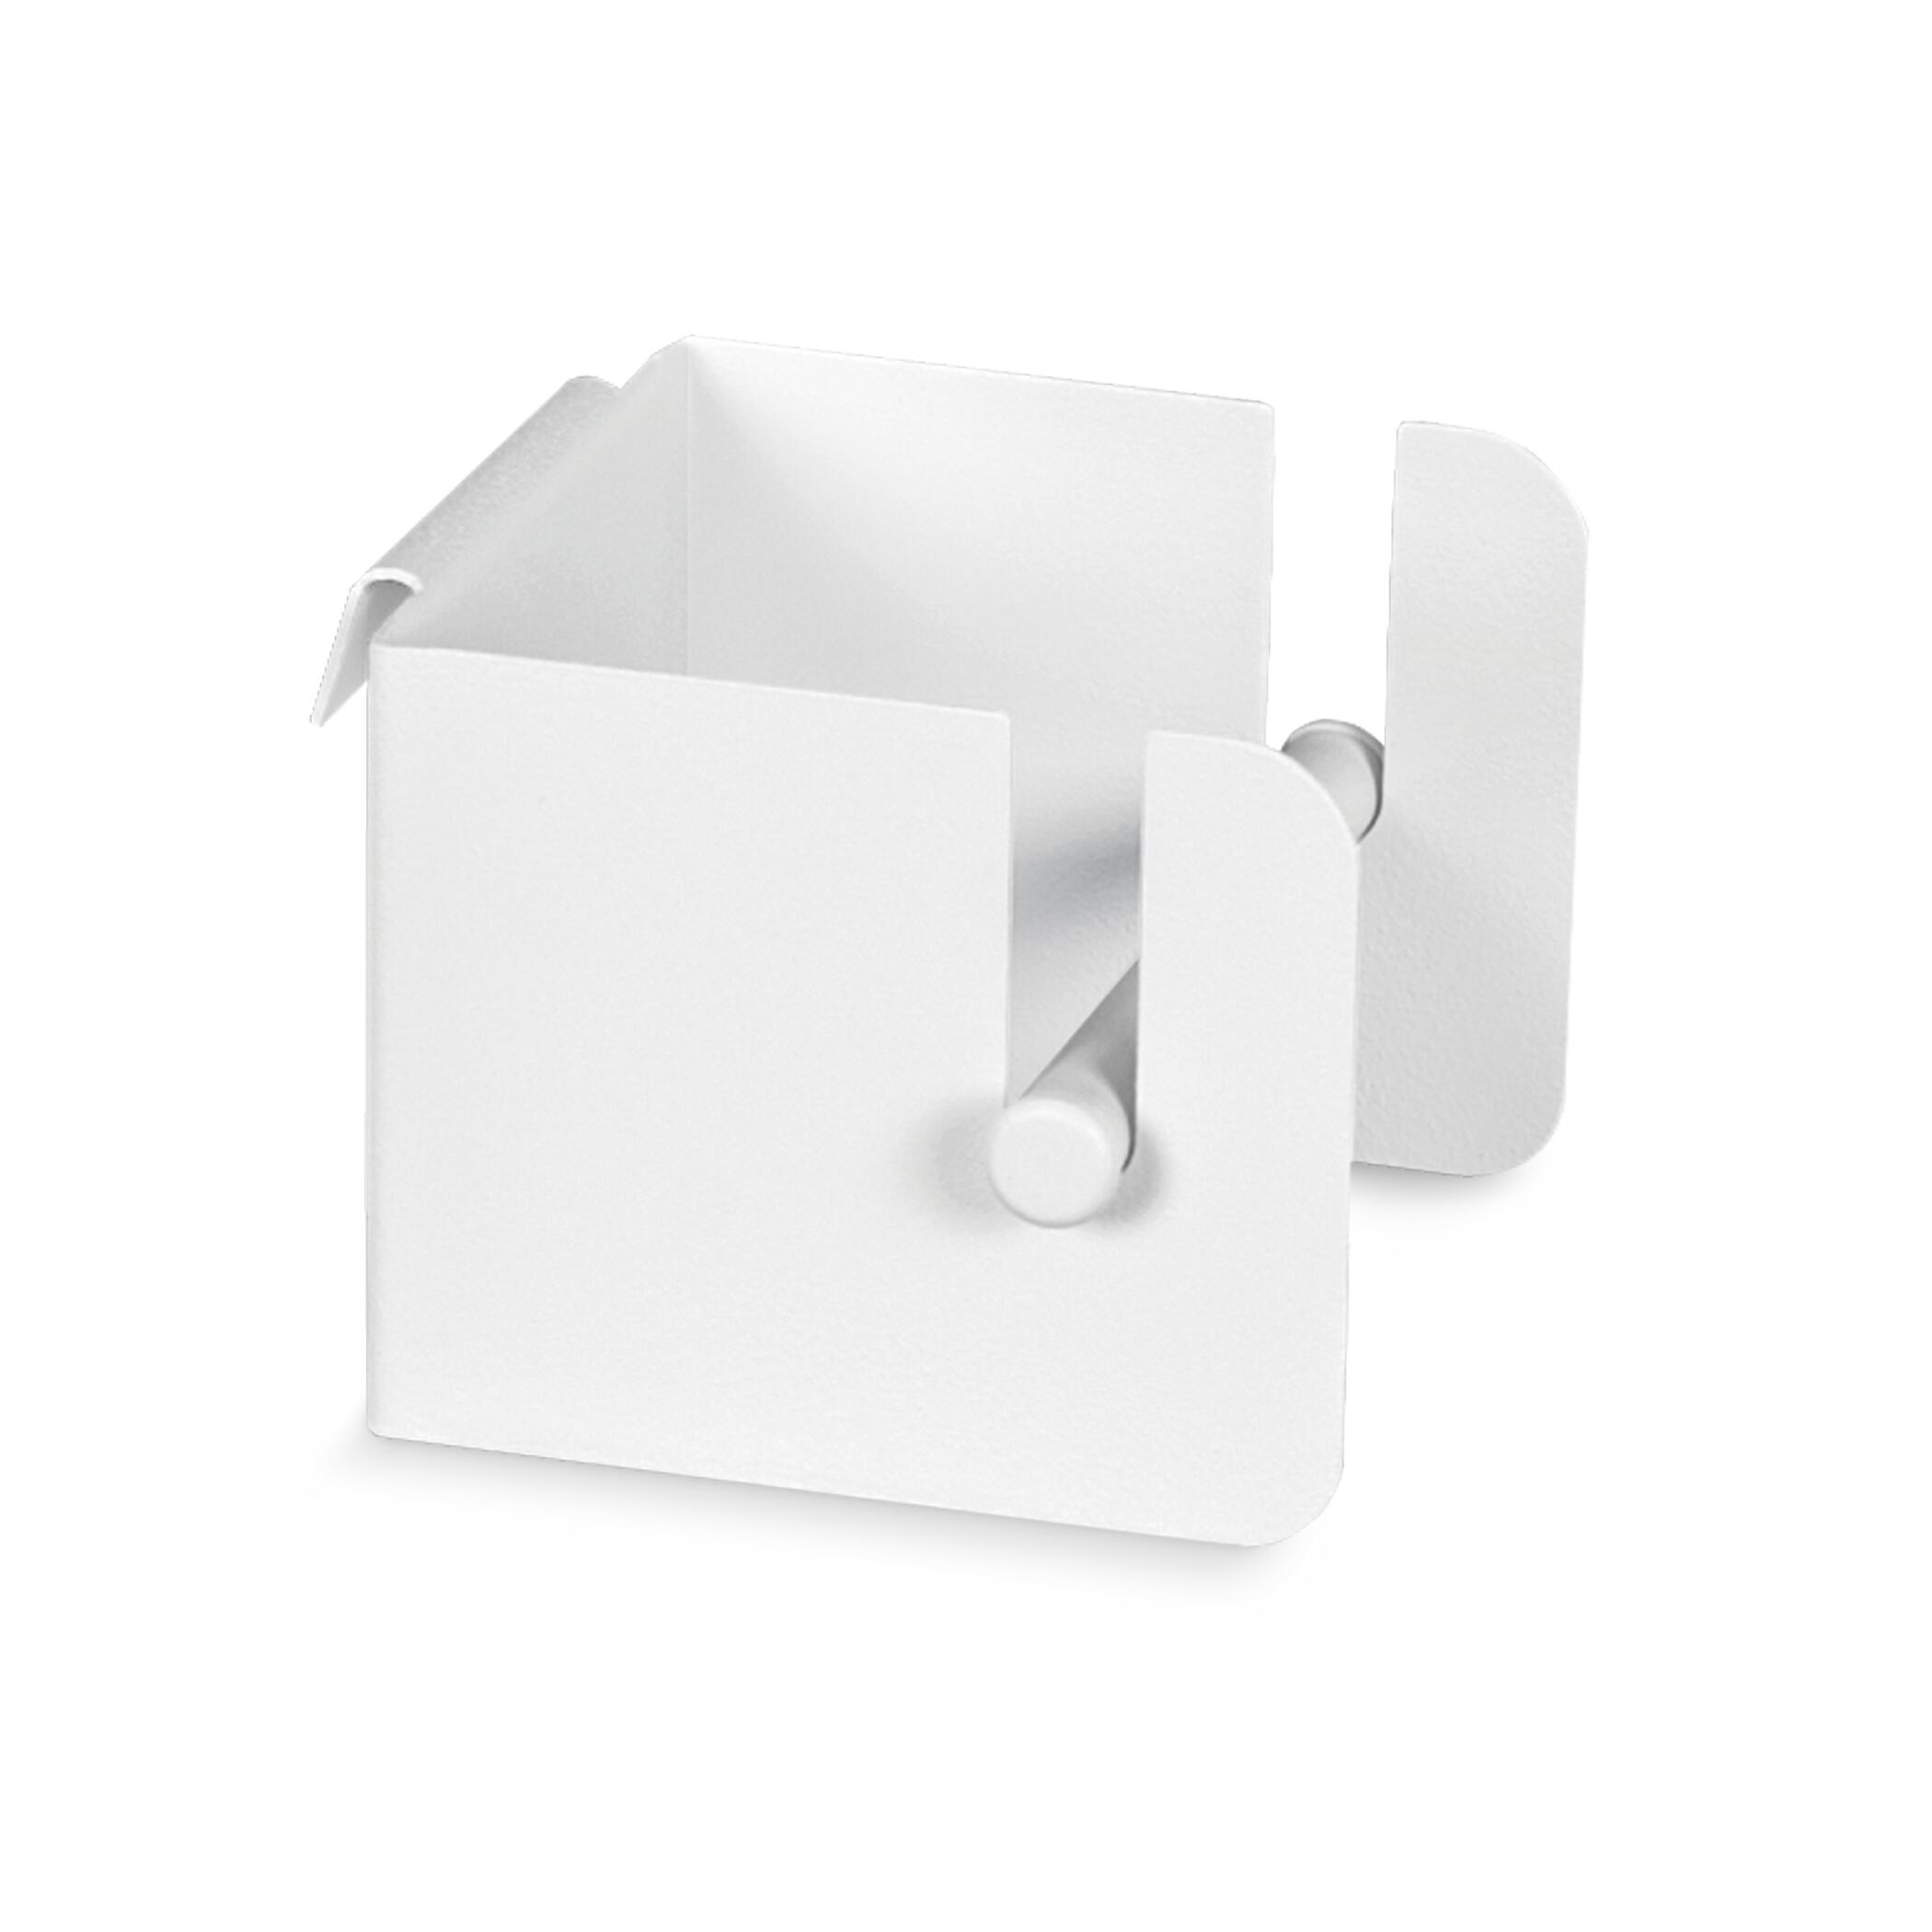 Portarrollo wc tokio-osaka blanco aspecto texturizado 11x7.5 cm